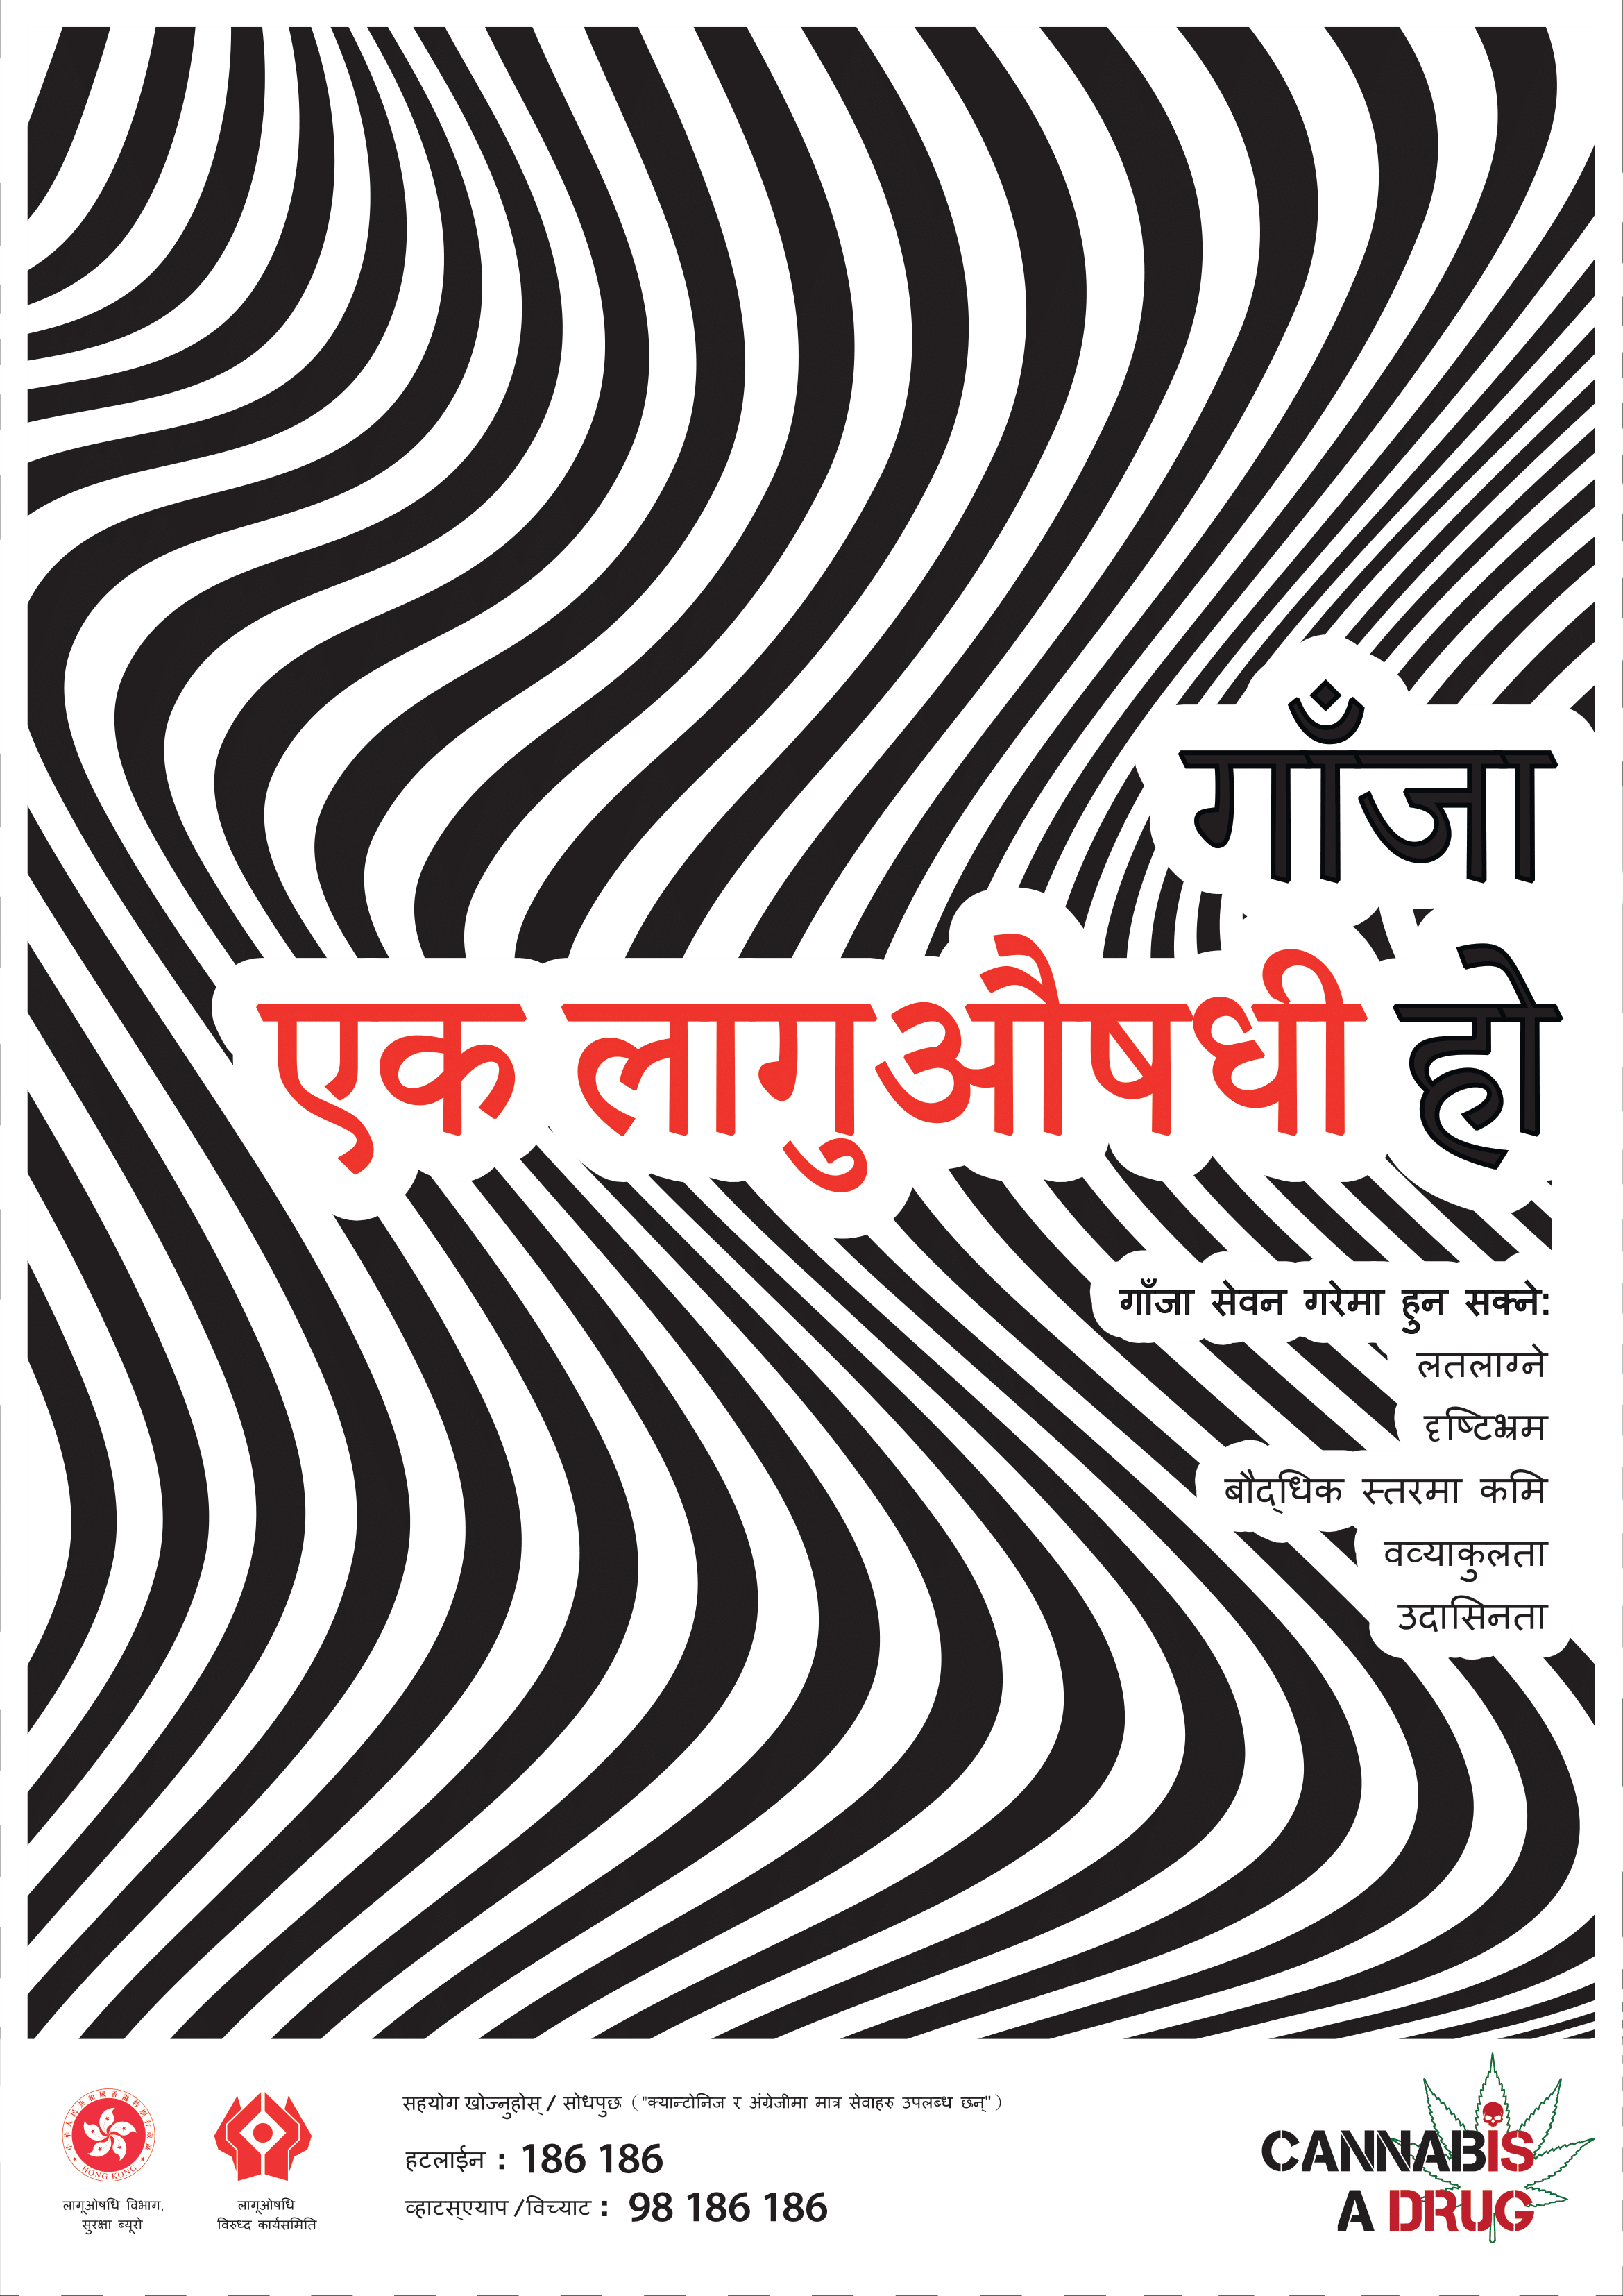 Anti-drug poster "Cannabis is a drug" - Nepali version